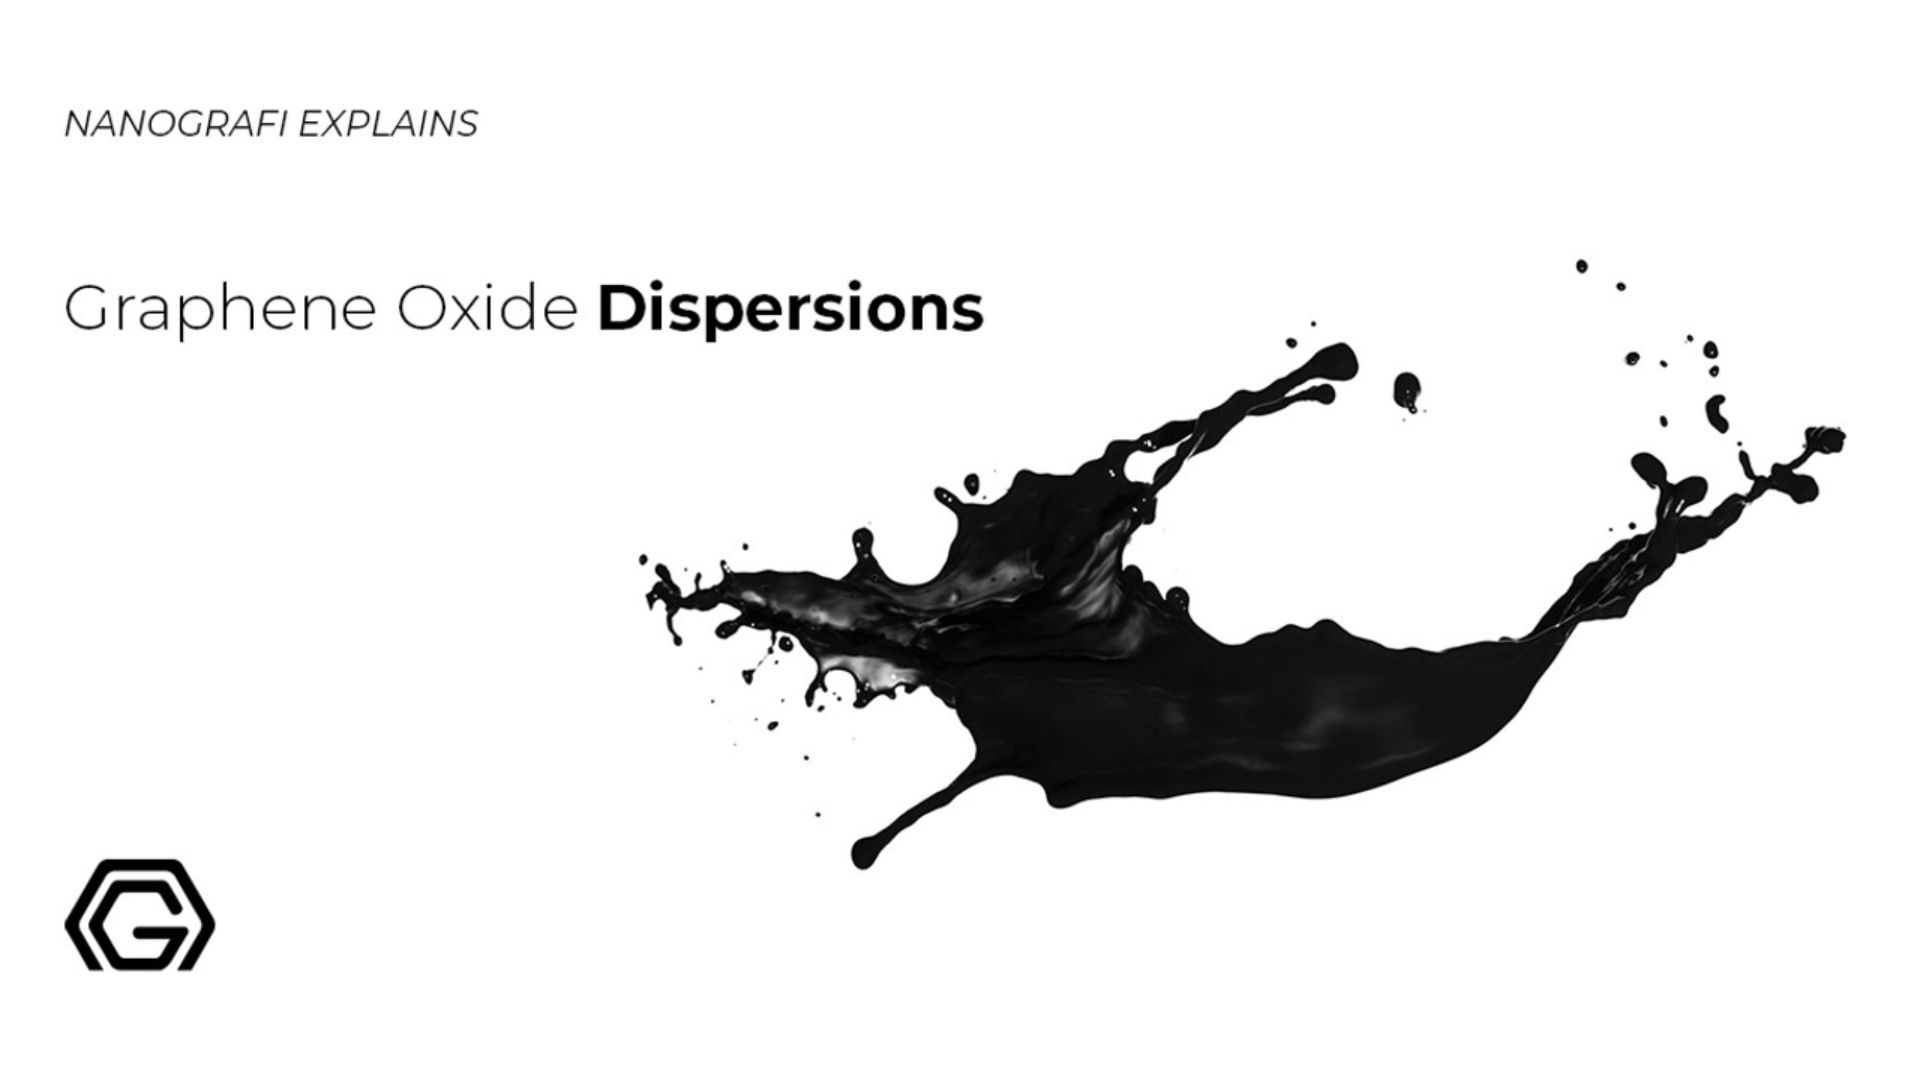 Graphene oxide dispersions